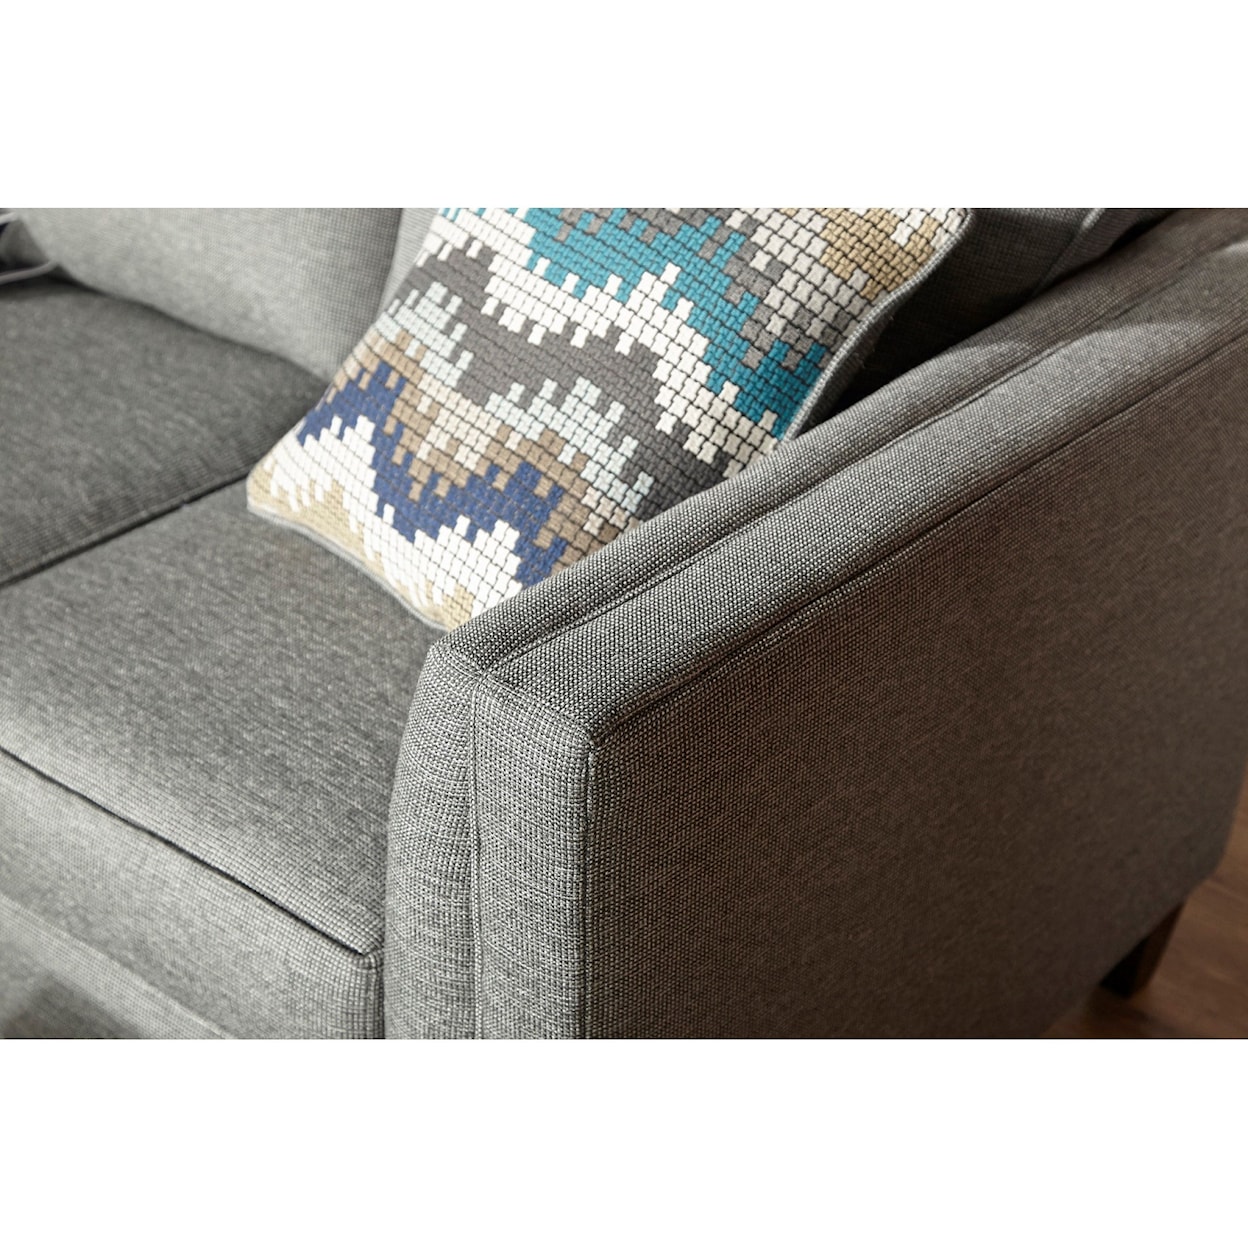 Serta Upholstery by Hughes Furniture 9300 Stationary Loveseat